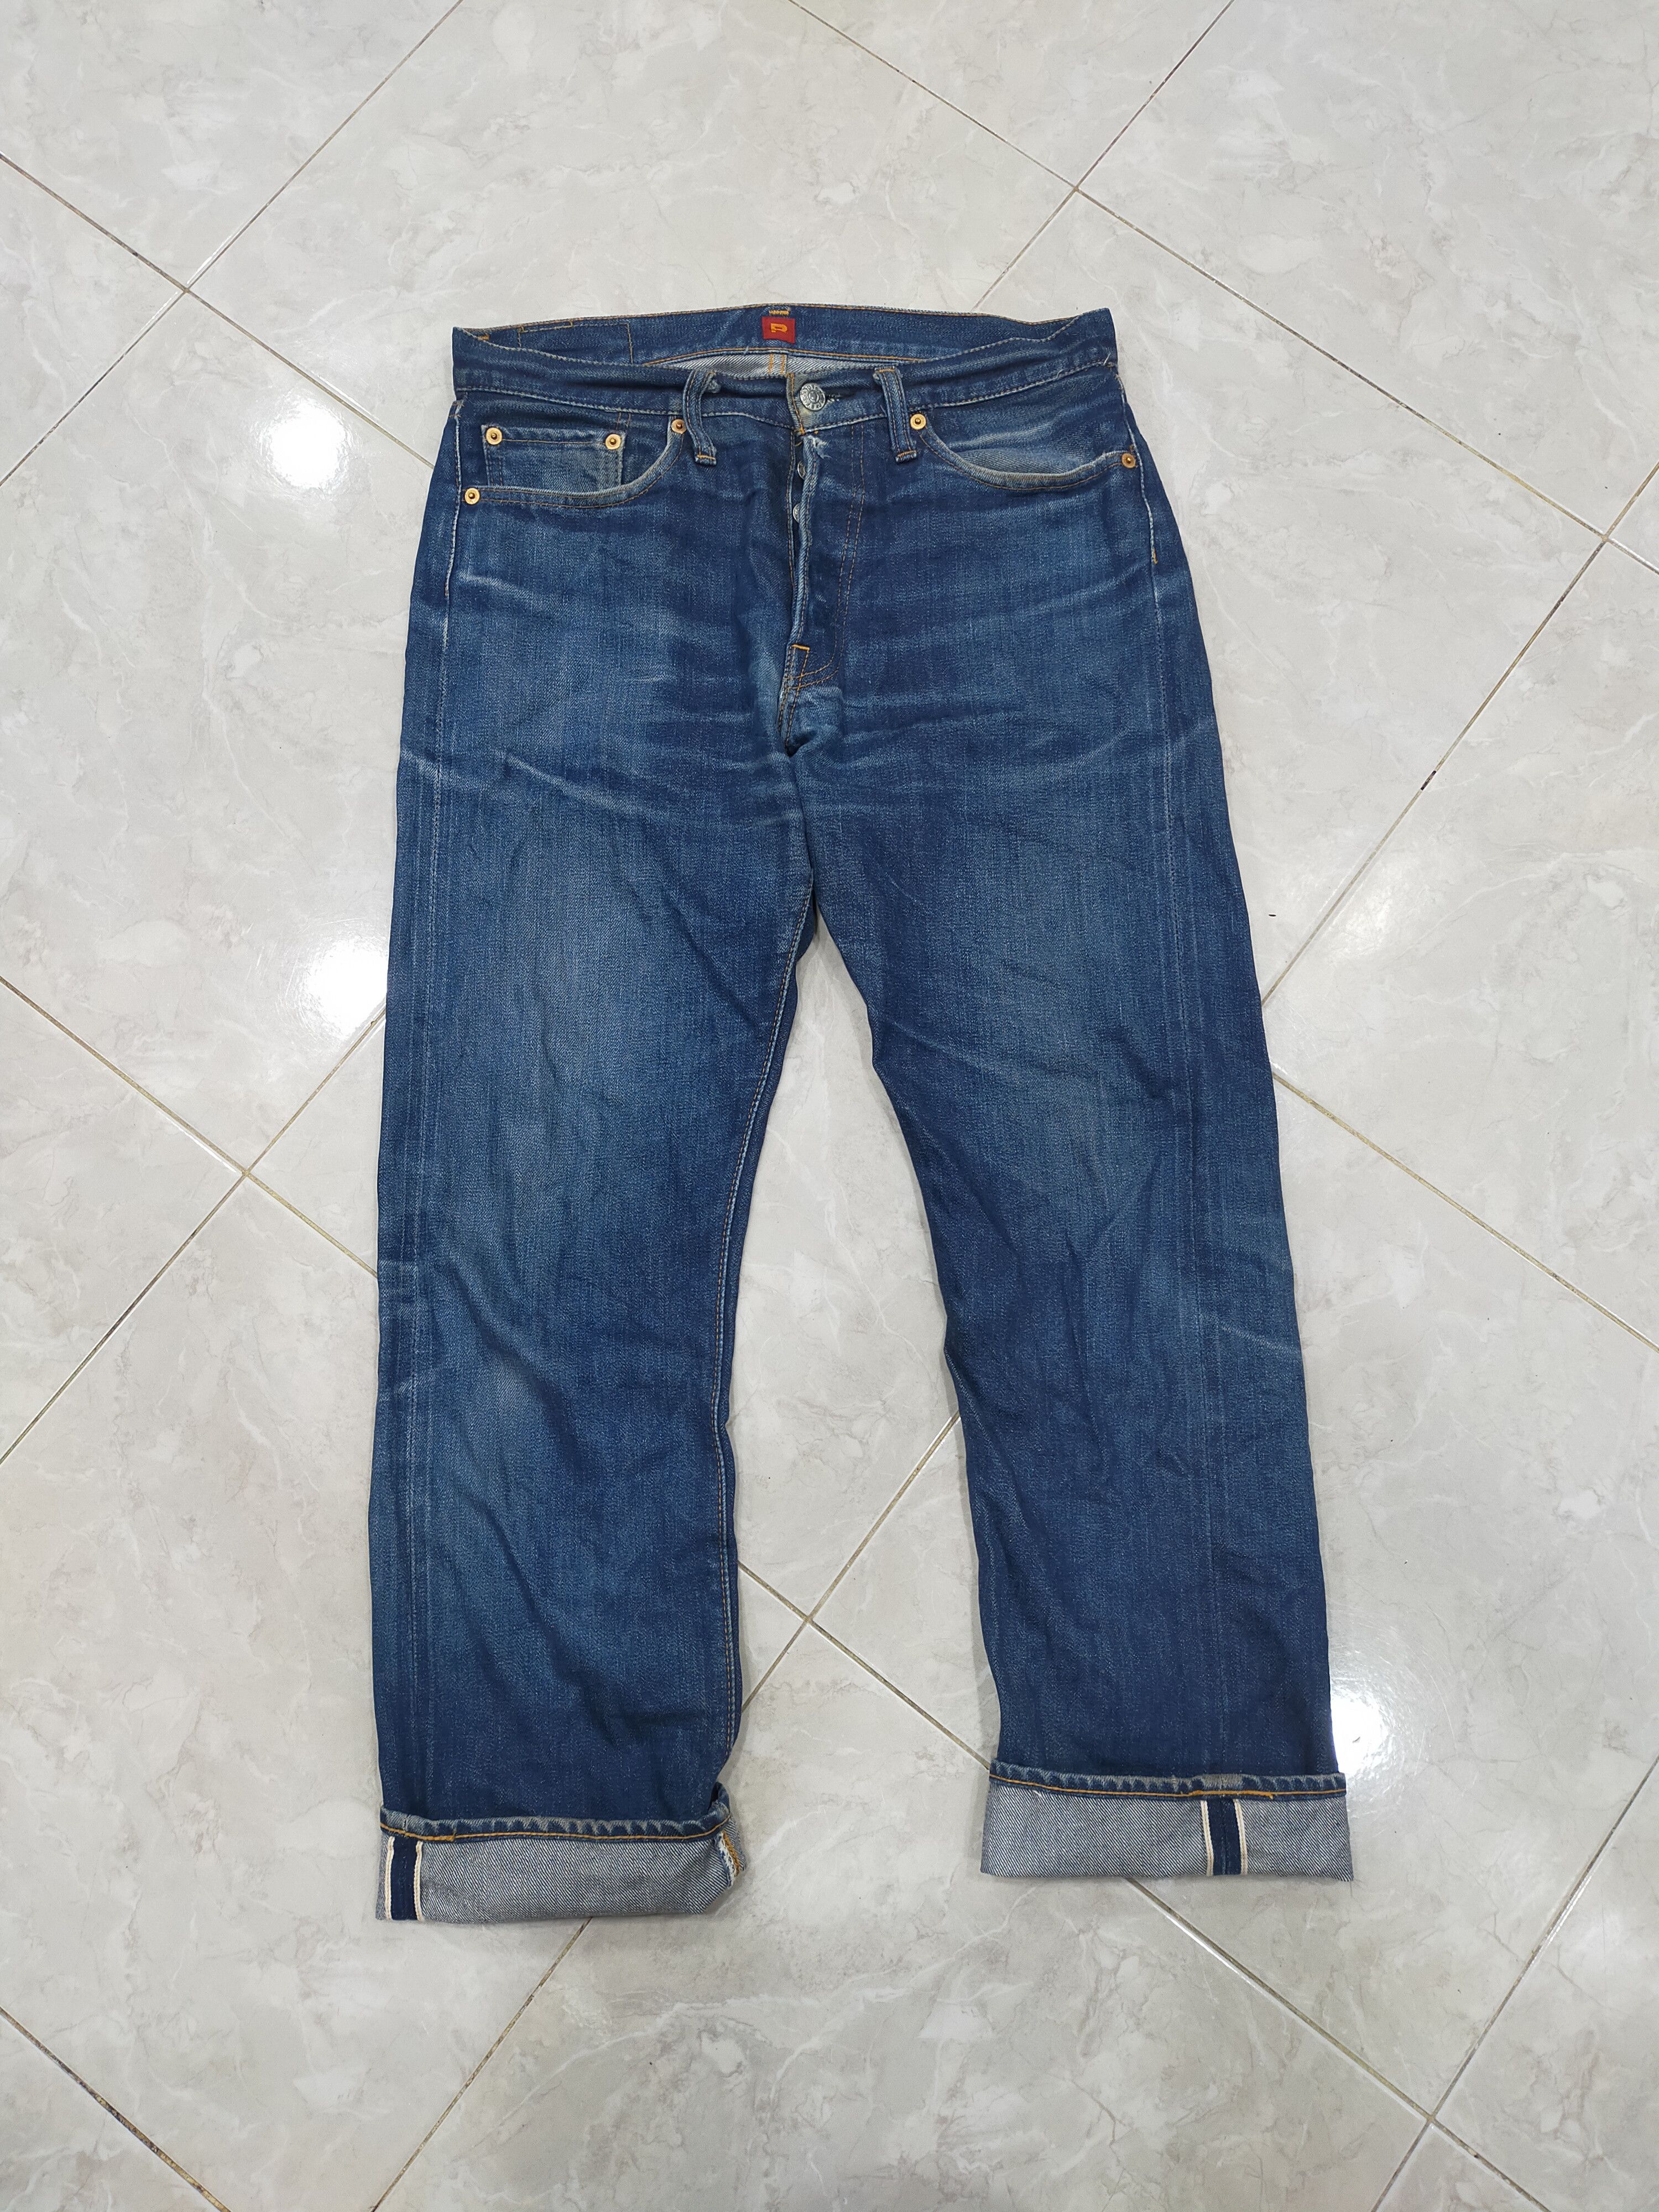 Distressed Denim Resolute Selvedge Japan Jeans | Grailed